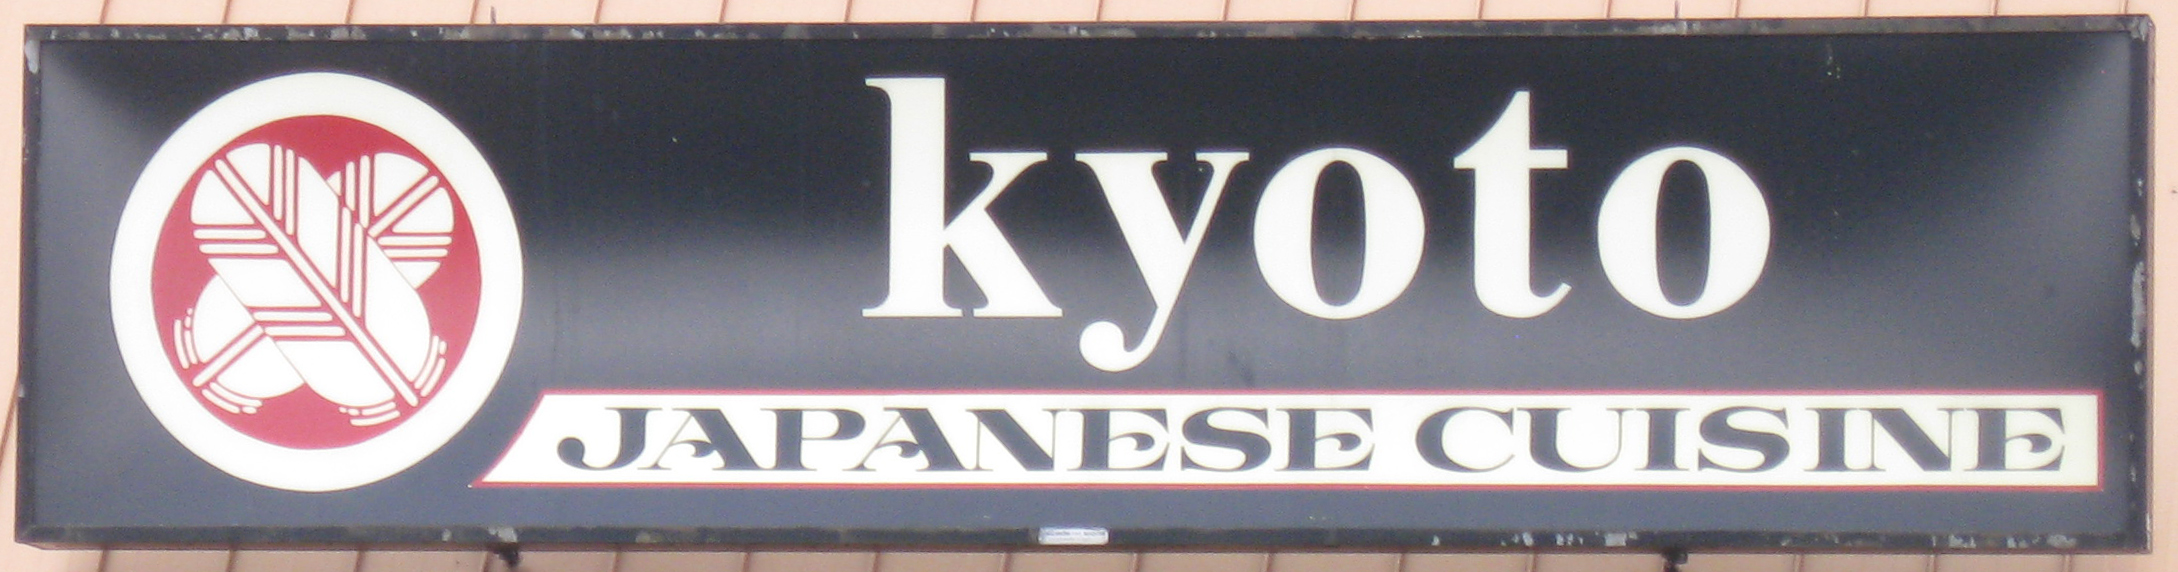 Kyoto Japanese Restaurant - Salem, Oregon - Japanese Restaurants on